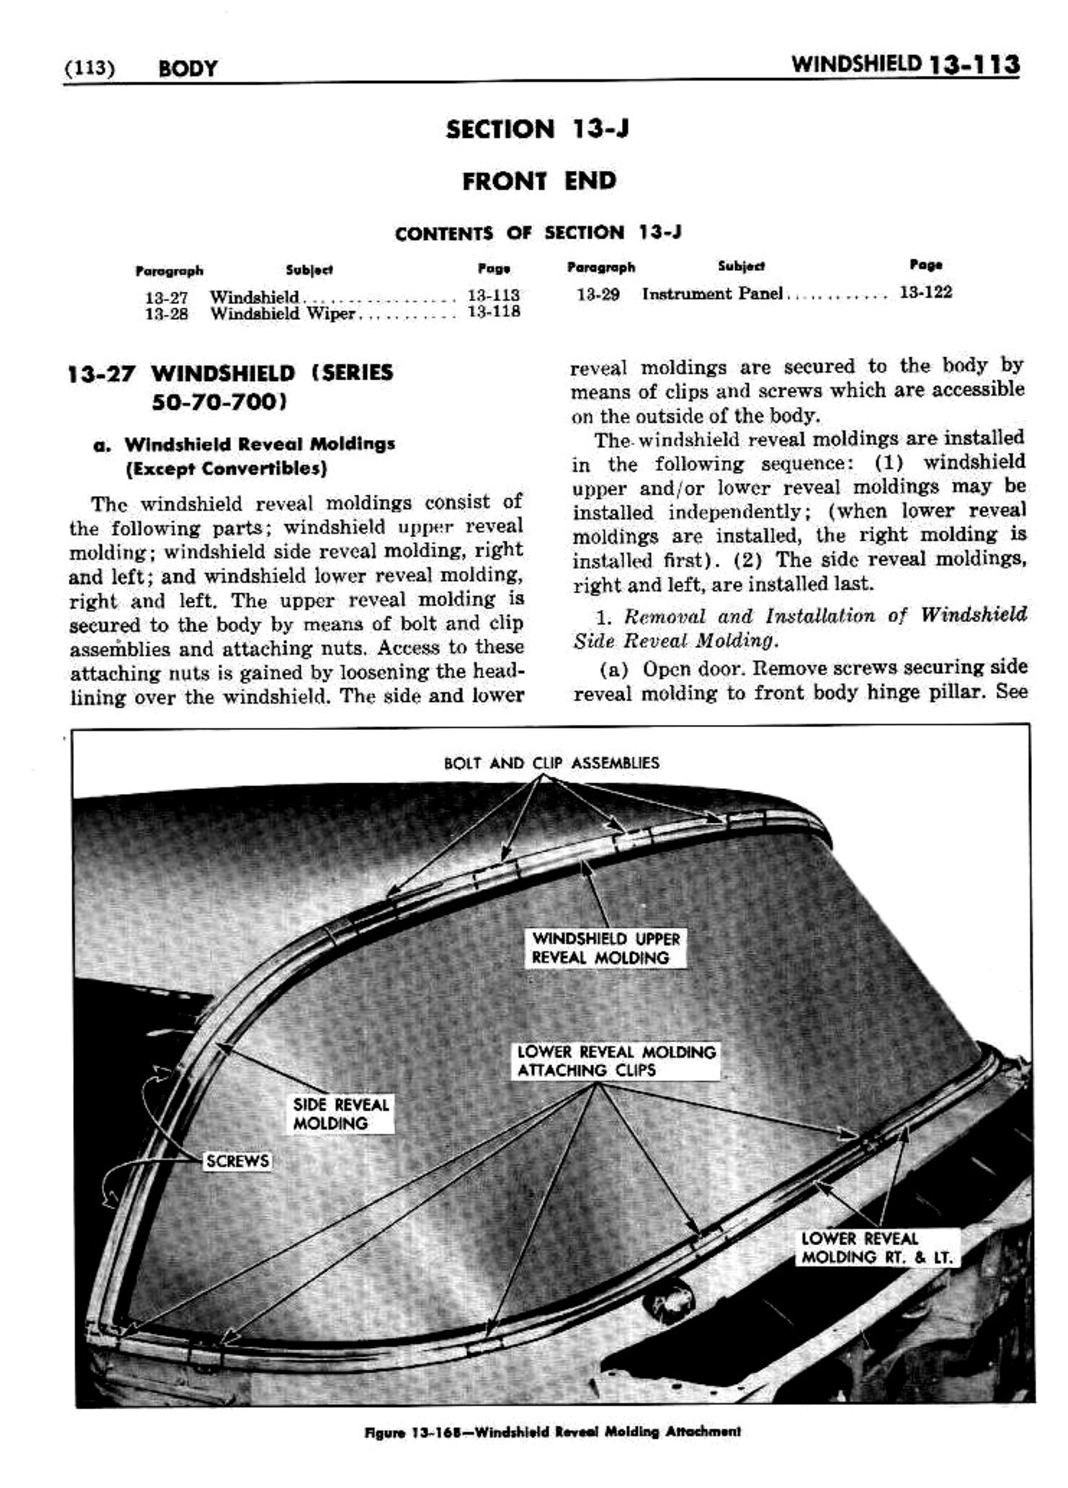 n_1958 Buick Body Service Manual-114-114.jpg